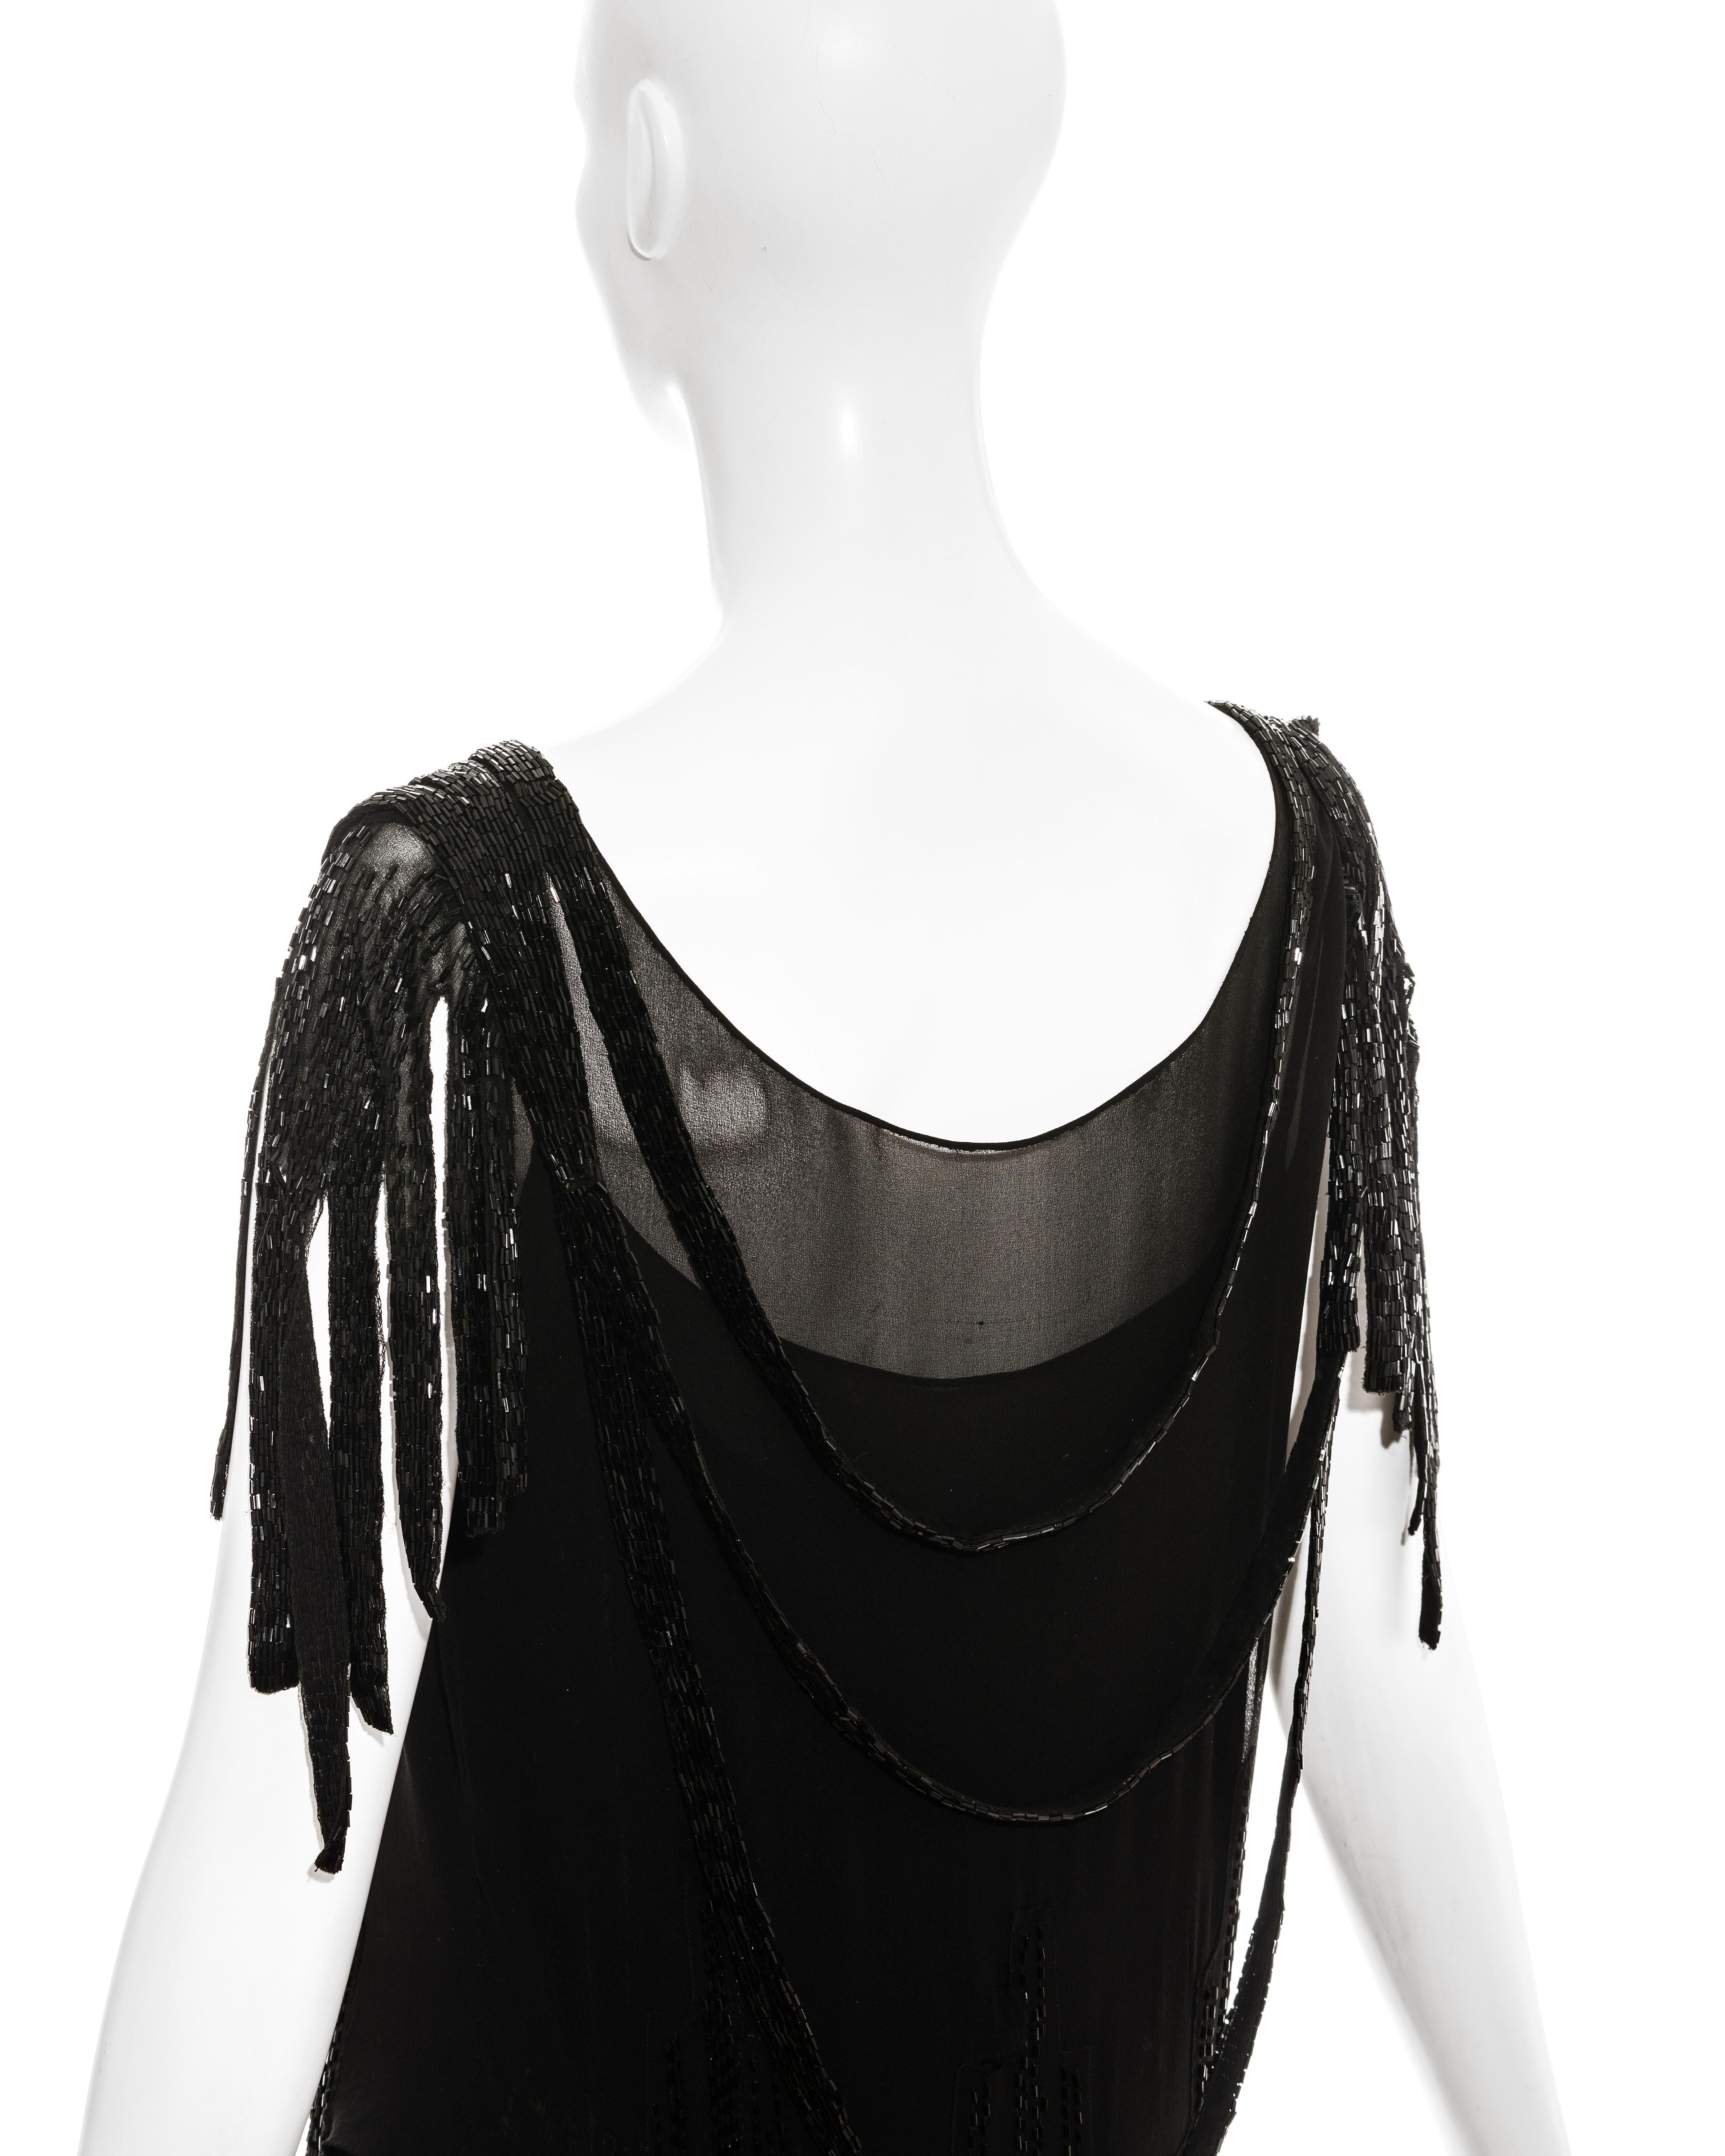 Women's Gabrielle Chanel couture black silk beaded flapper dress, c. 1924 - 1926